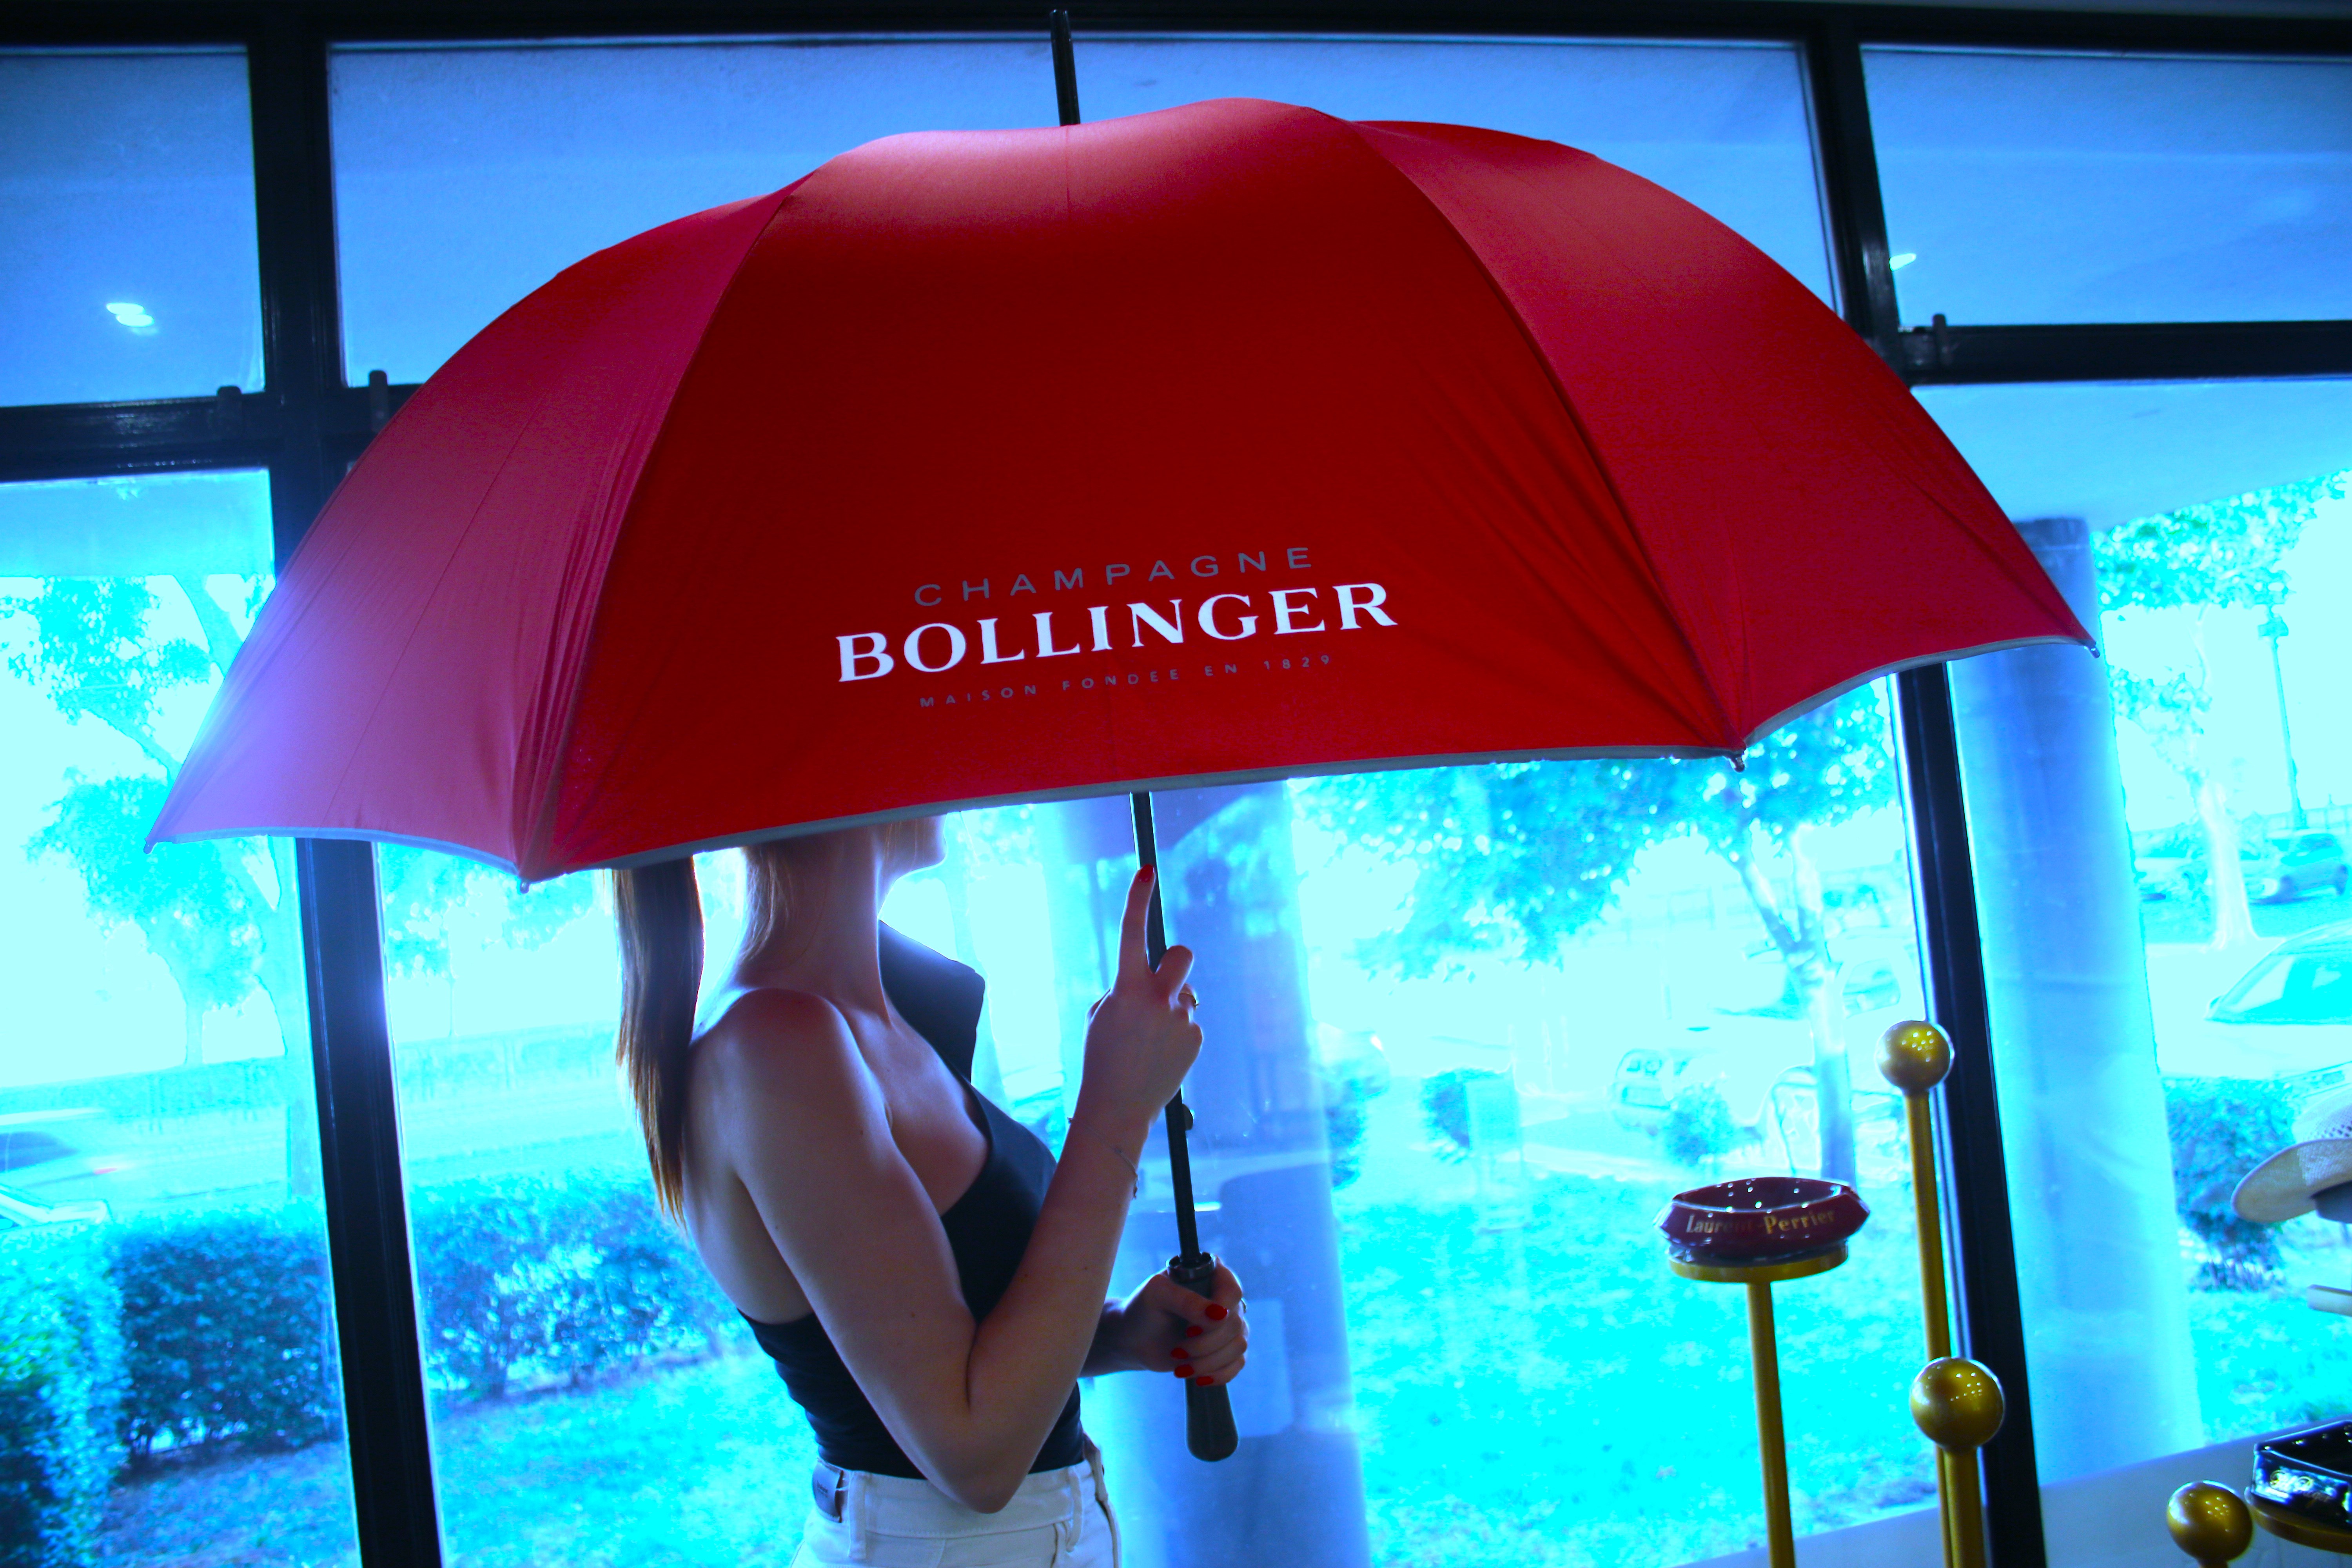 champagne_bollinger_golf_umbrella.JPG